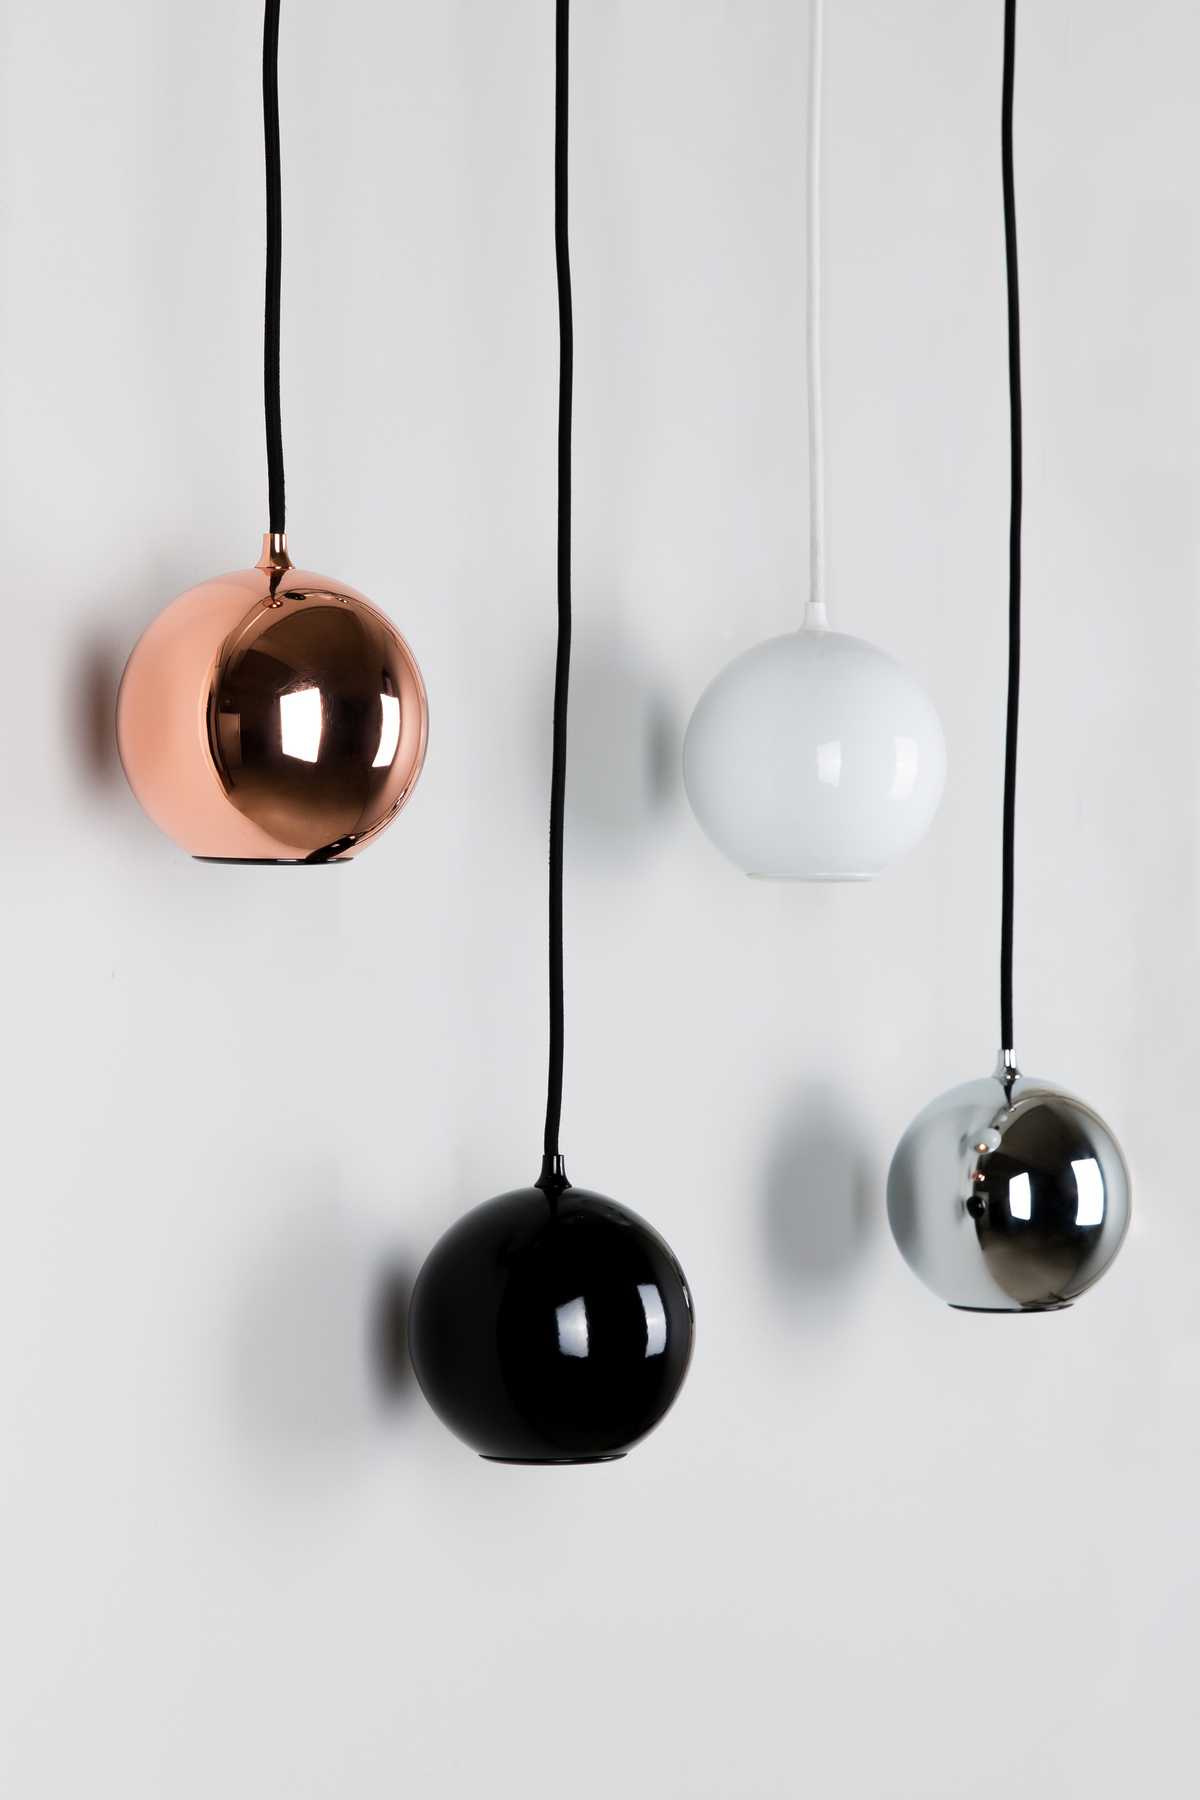 Maison et Objet Parigi gennaio 2016: Innermost presenta le sue lampade minimaliste